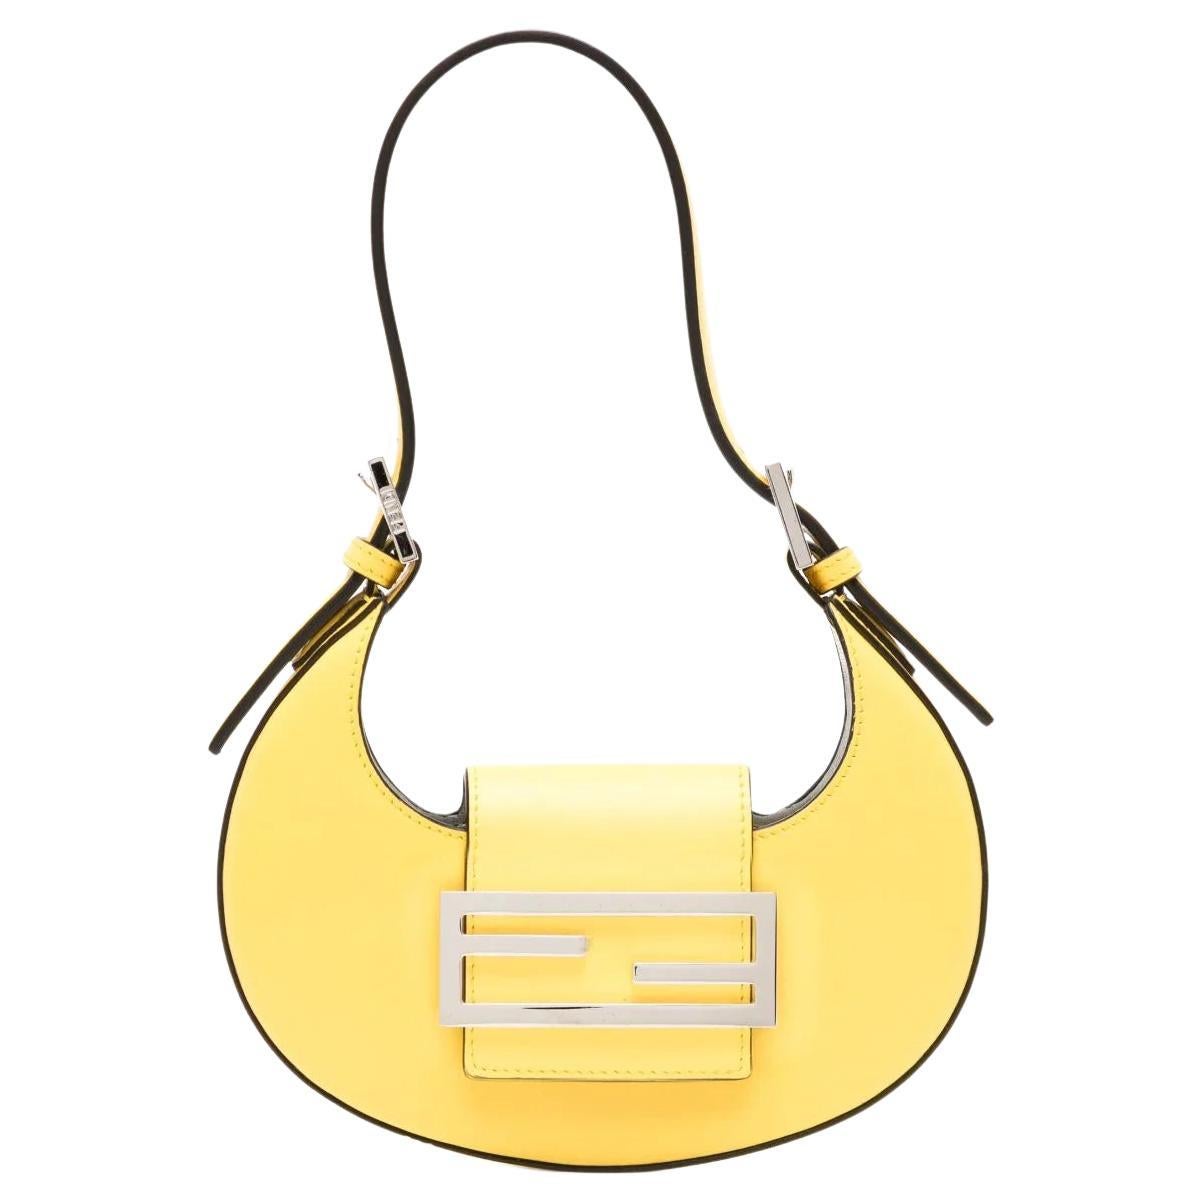 Where can I buy used Fendi handbags?